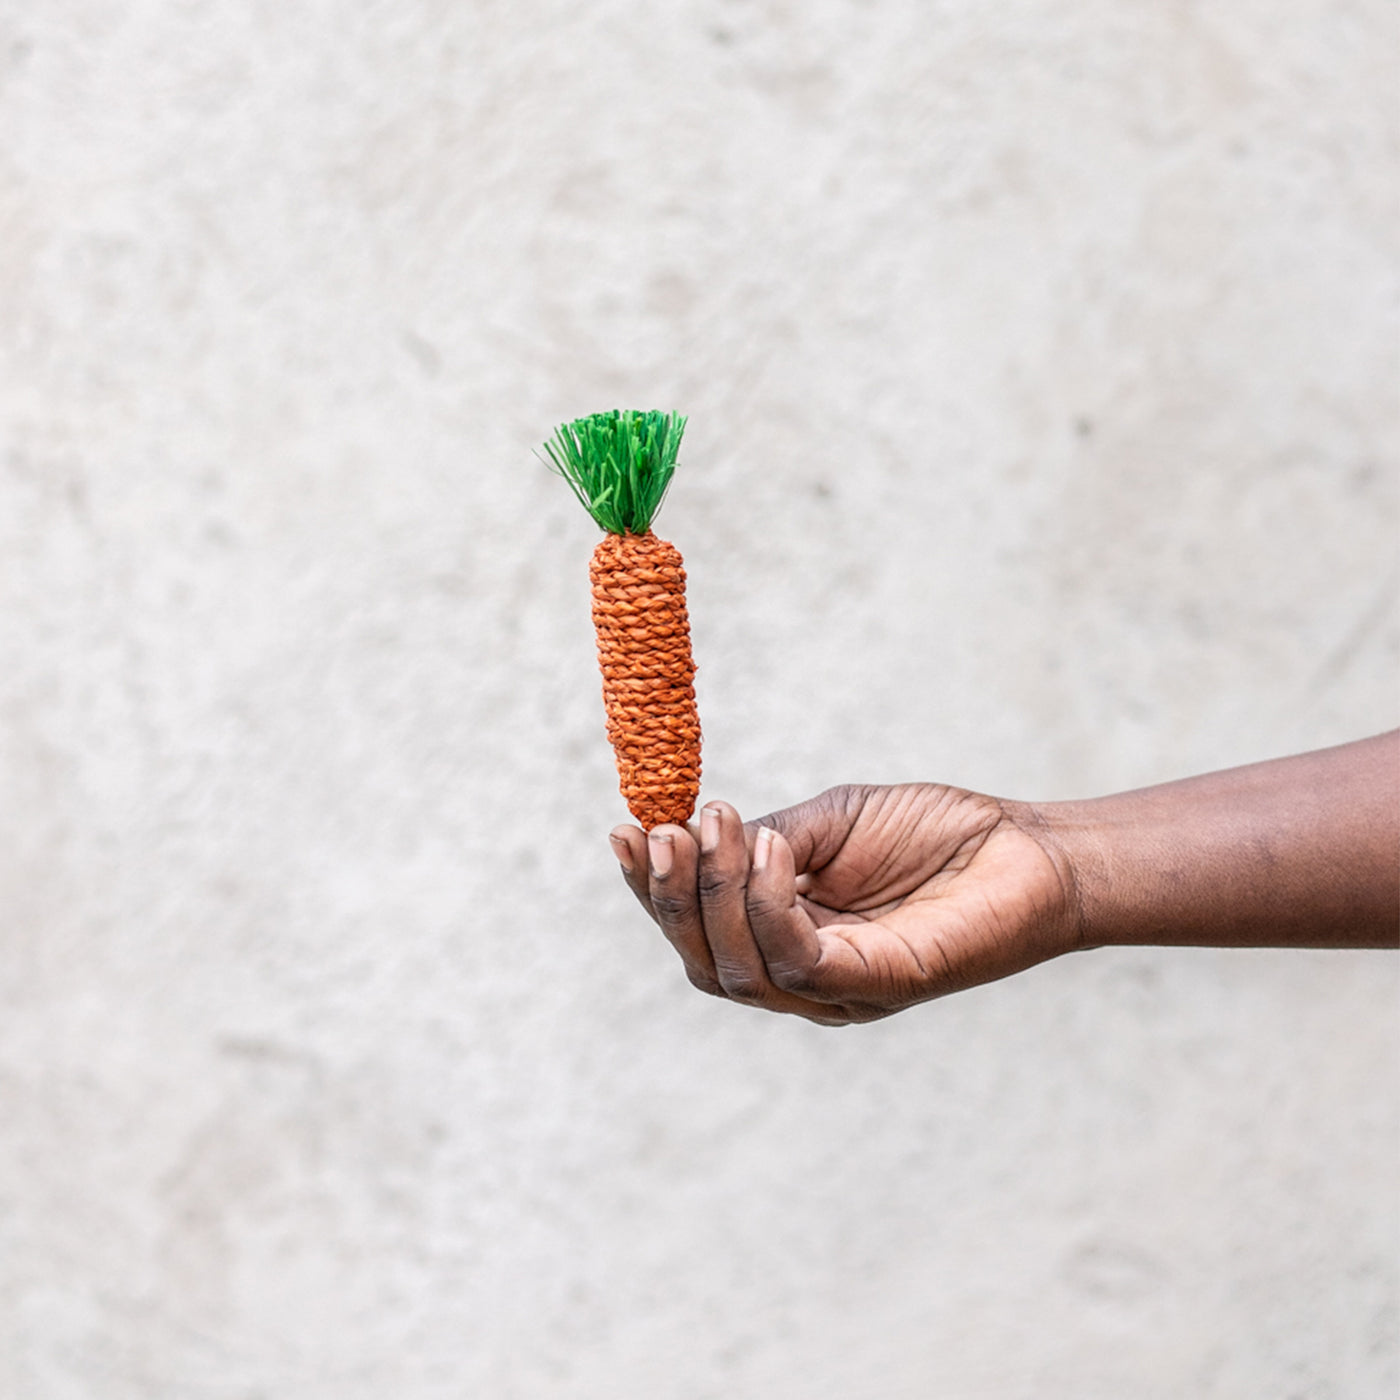 Easter Figurine - 5.5" Carrot